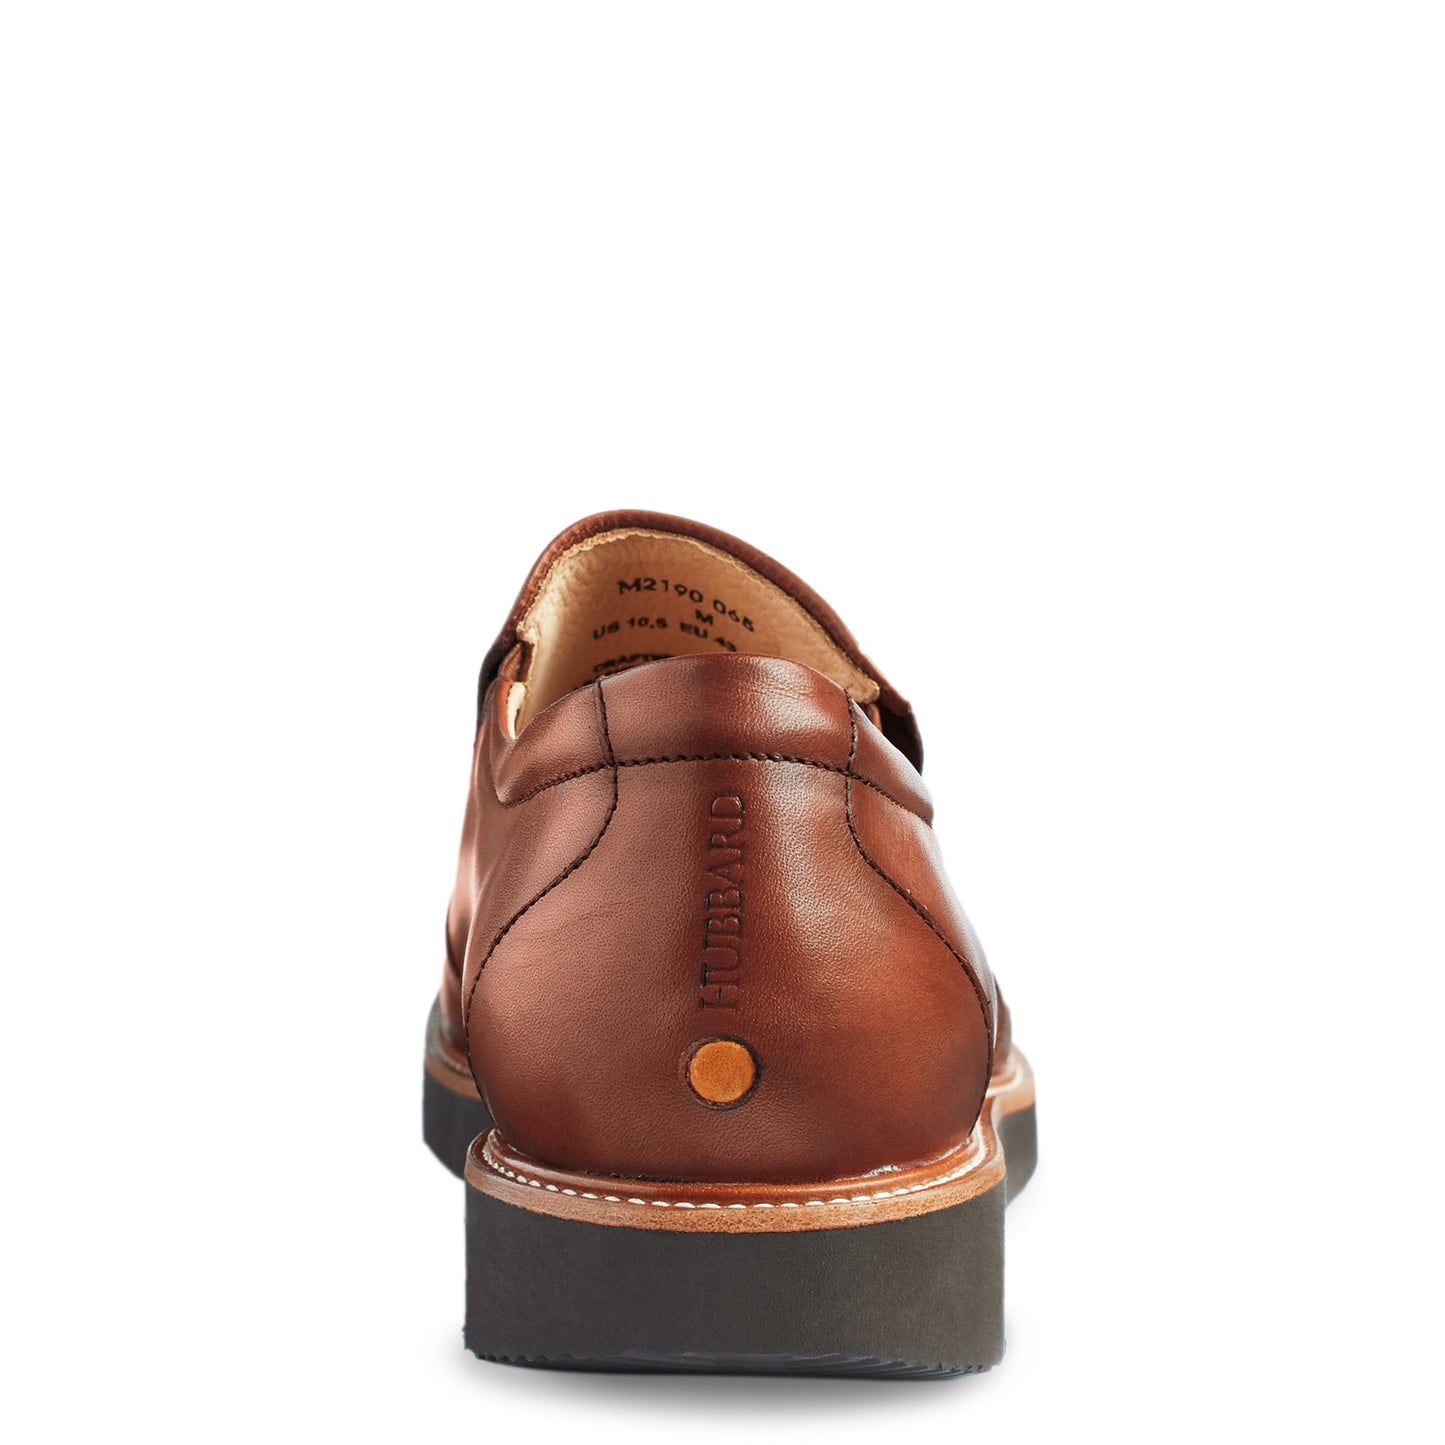 Peltz Shoes  Men's Samuel Hubbard Frequent Traveler Slip-On TAN M2190-065